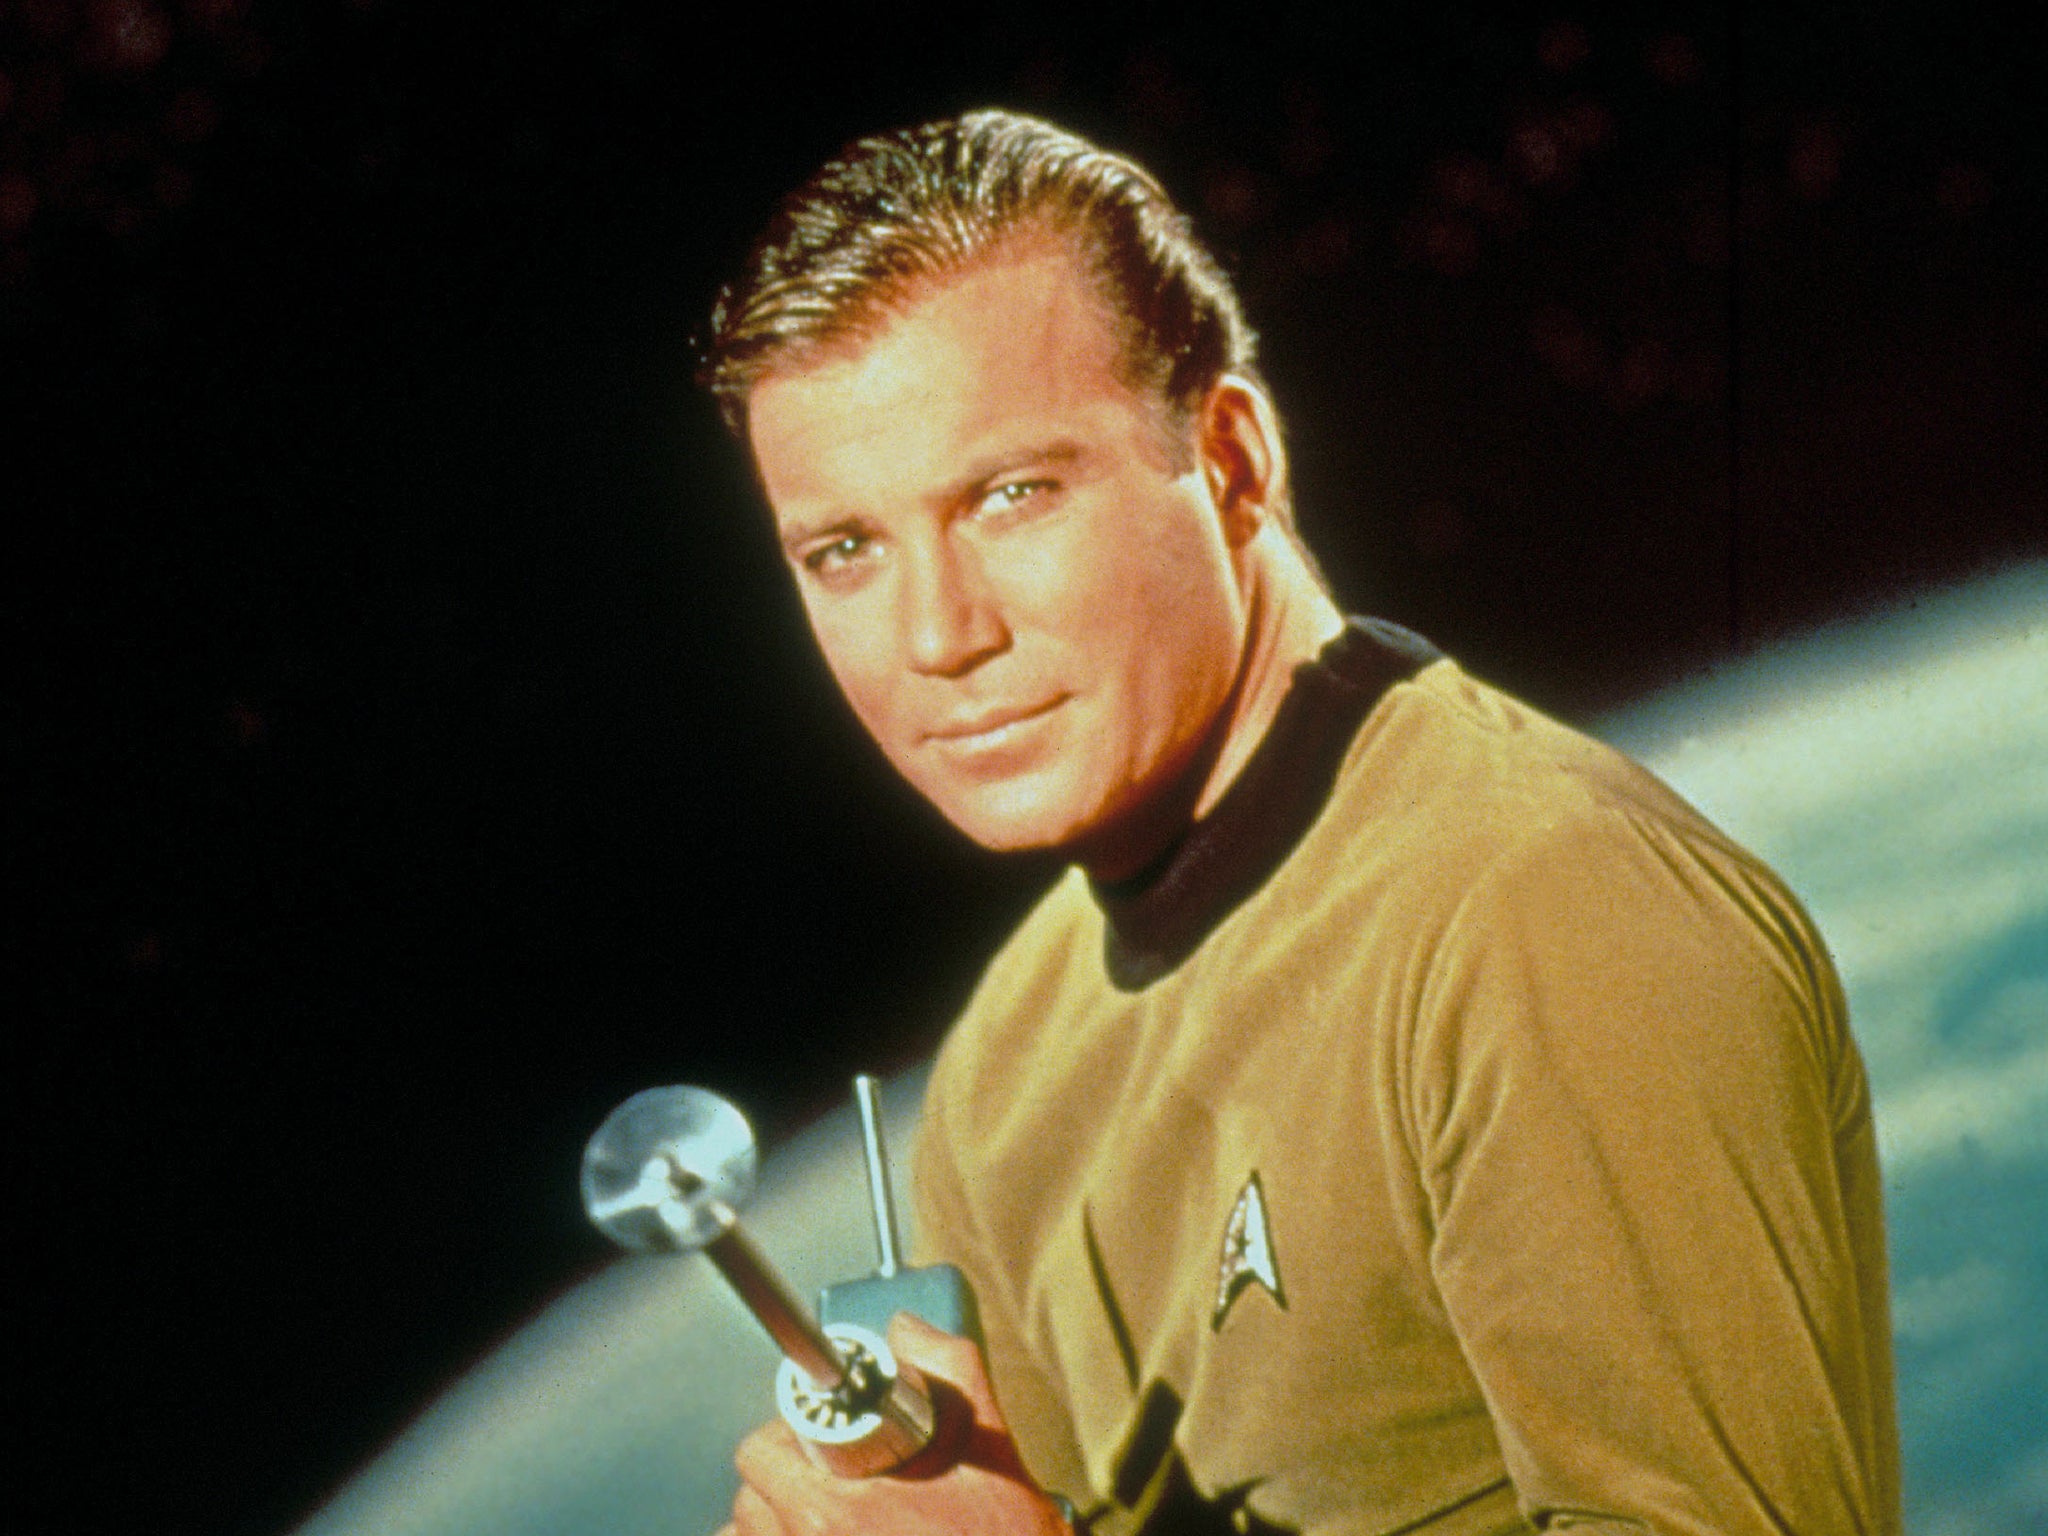 William Shatner as Captain Kirk in 1966